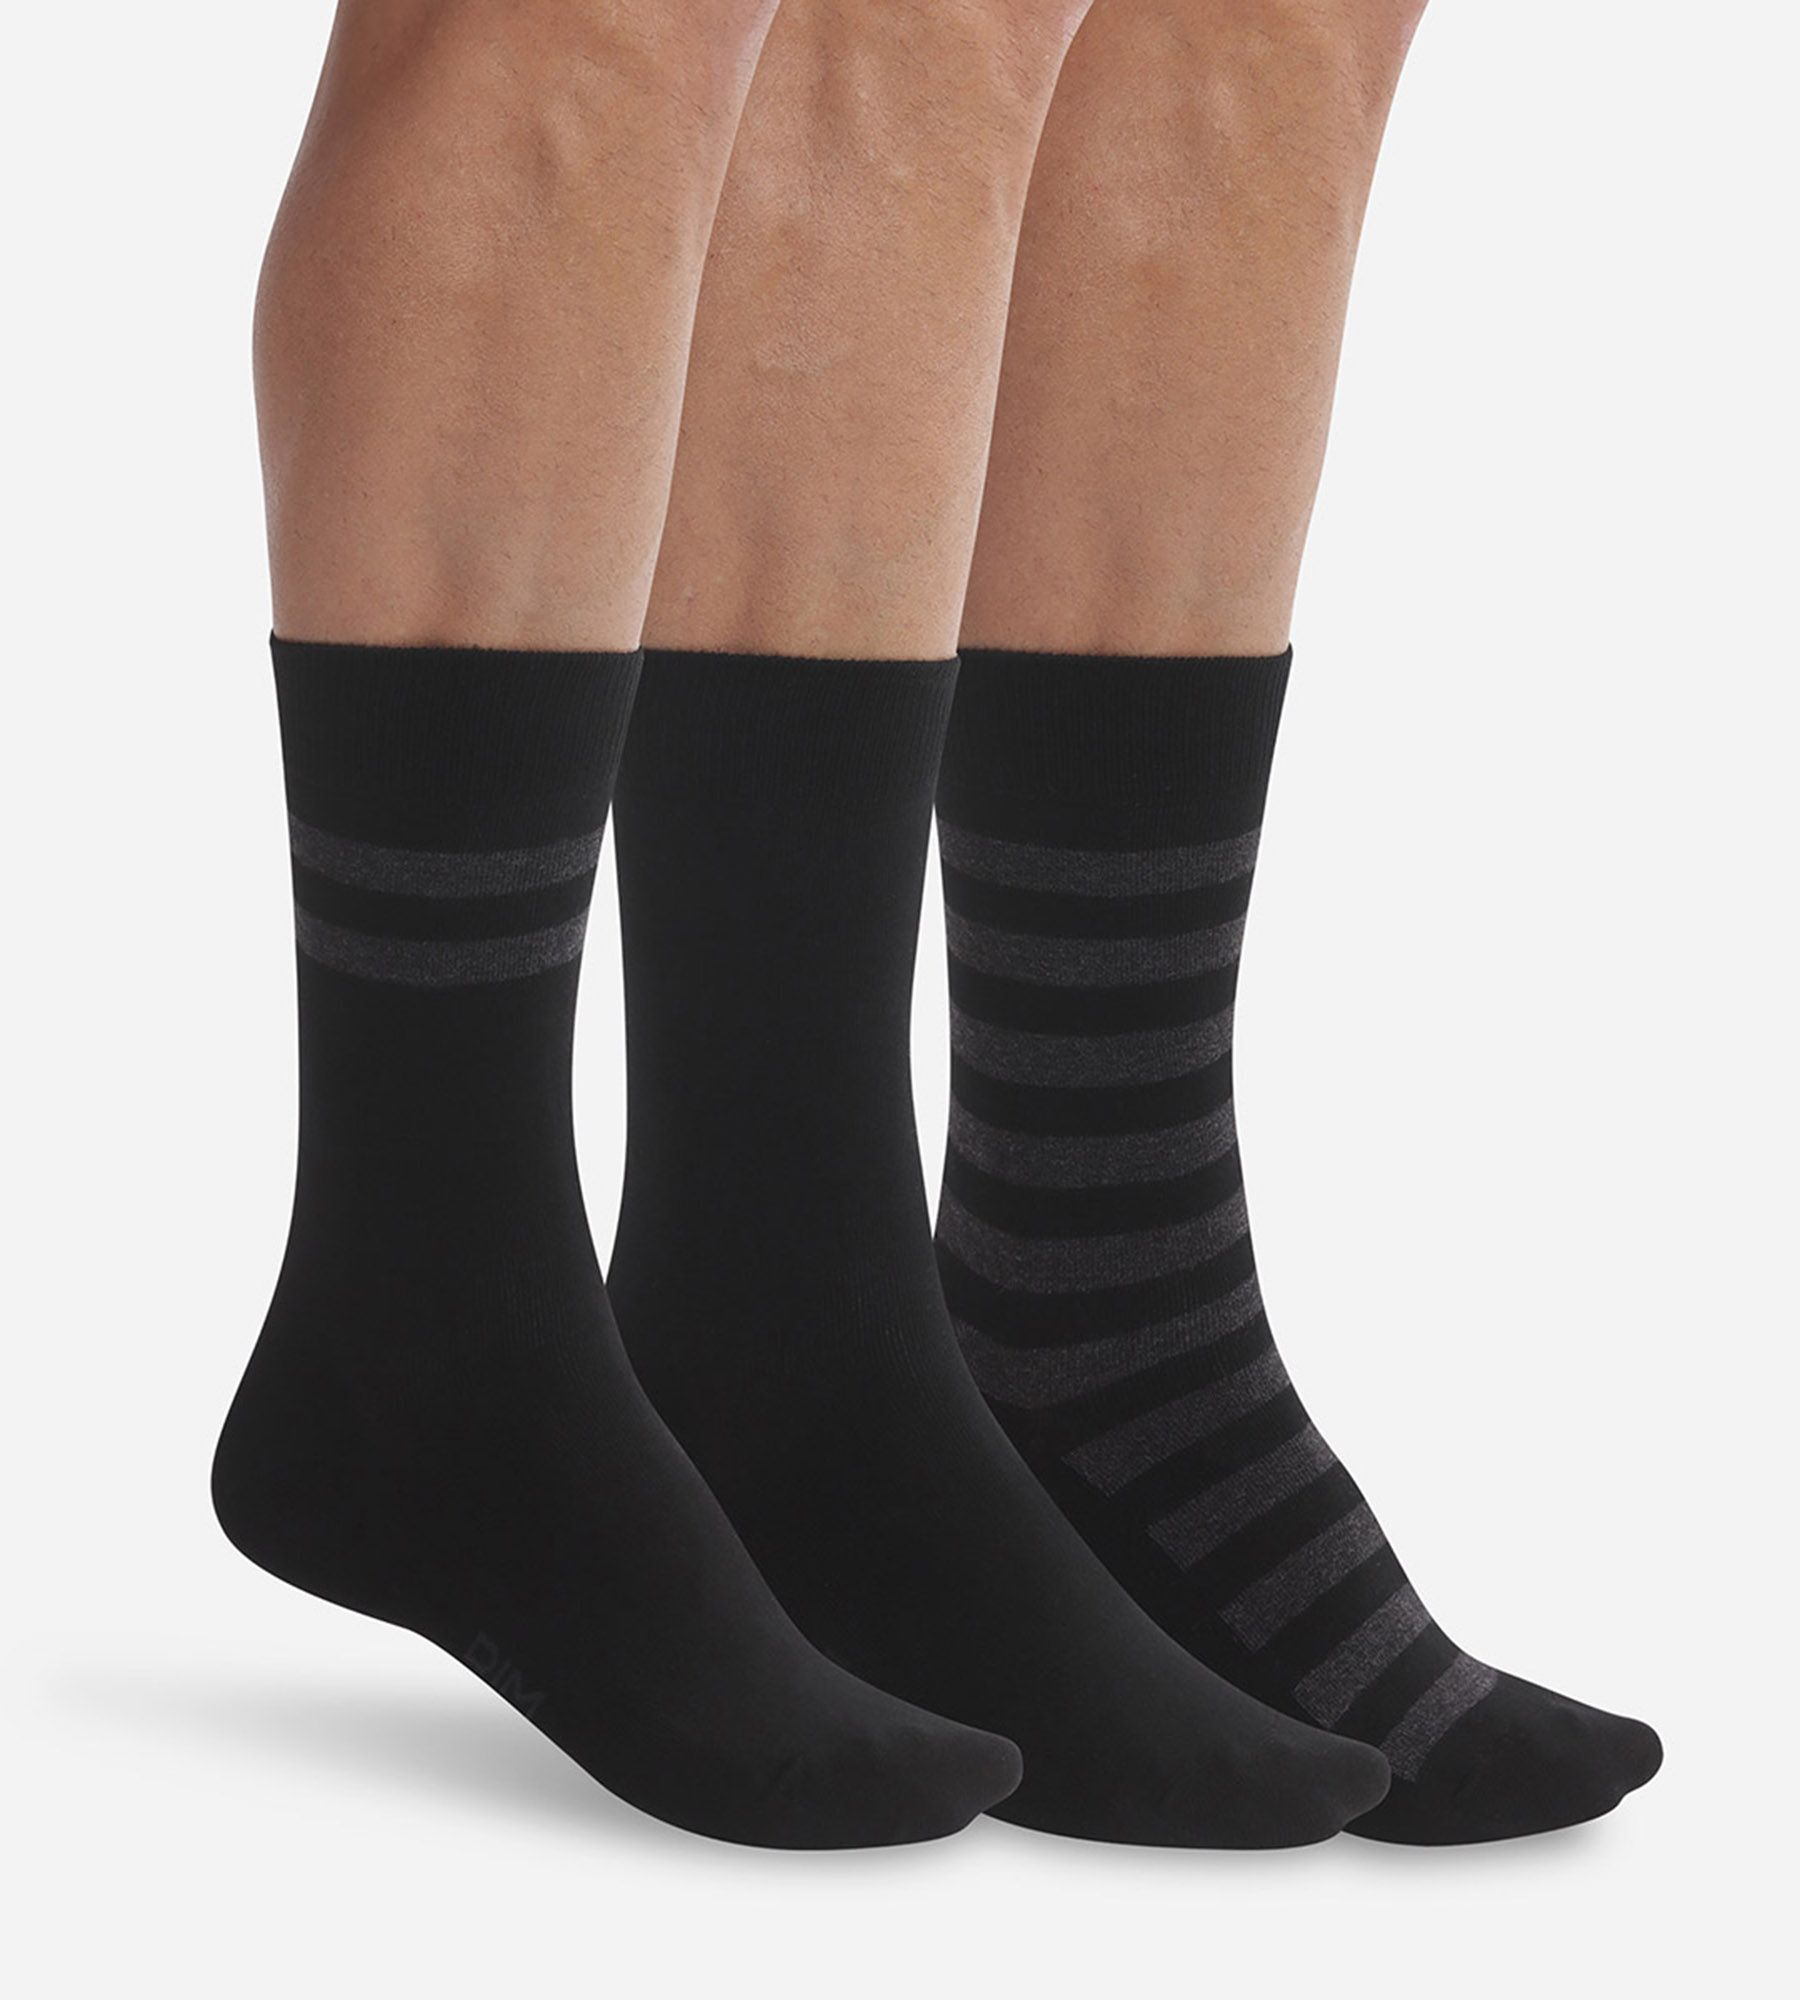 Pack de 3 pares de calcetines negros a rayas para hombre Dim Coton Style